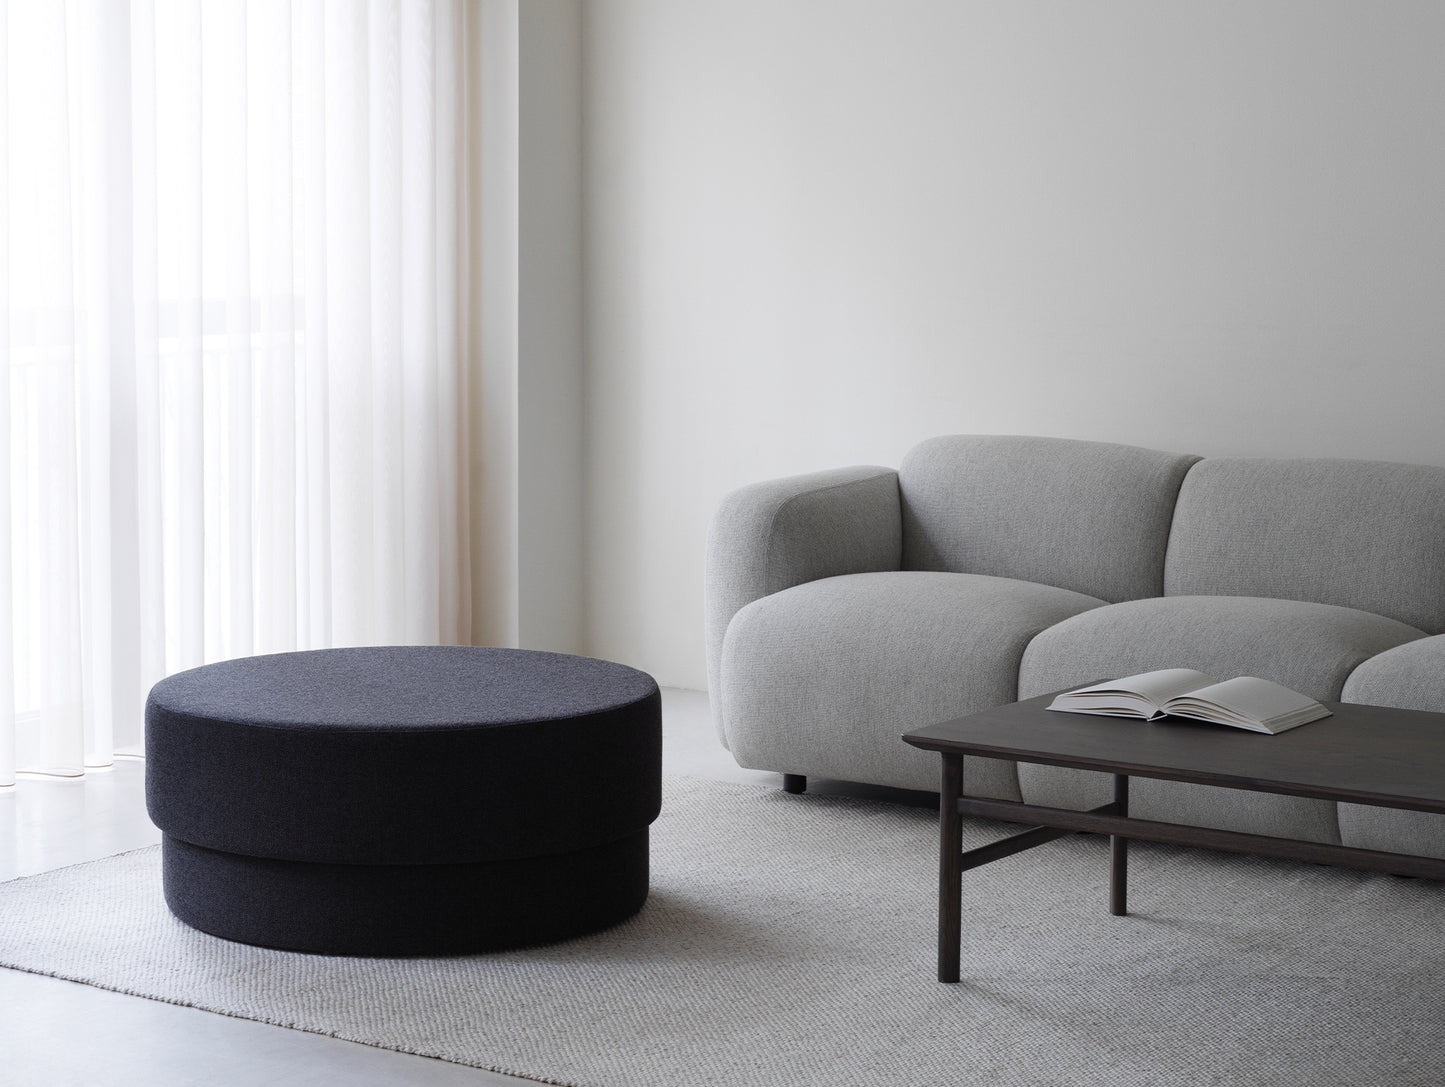 Swell Modular Sofa by Normann Copenhagen / Hallingdal 65 173